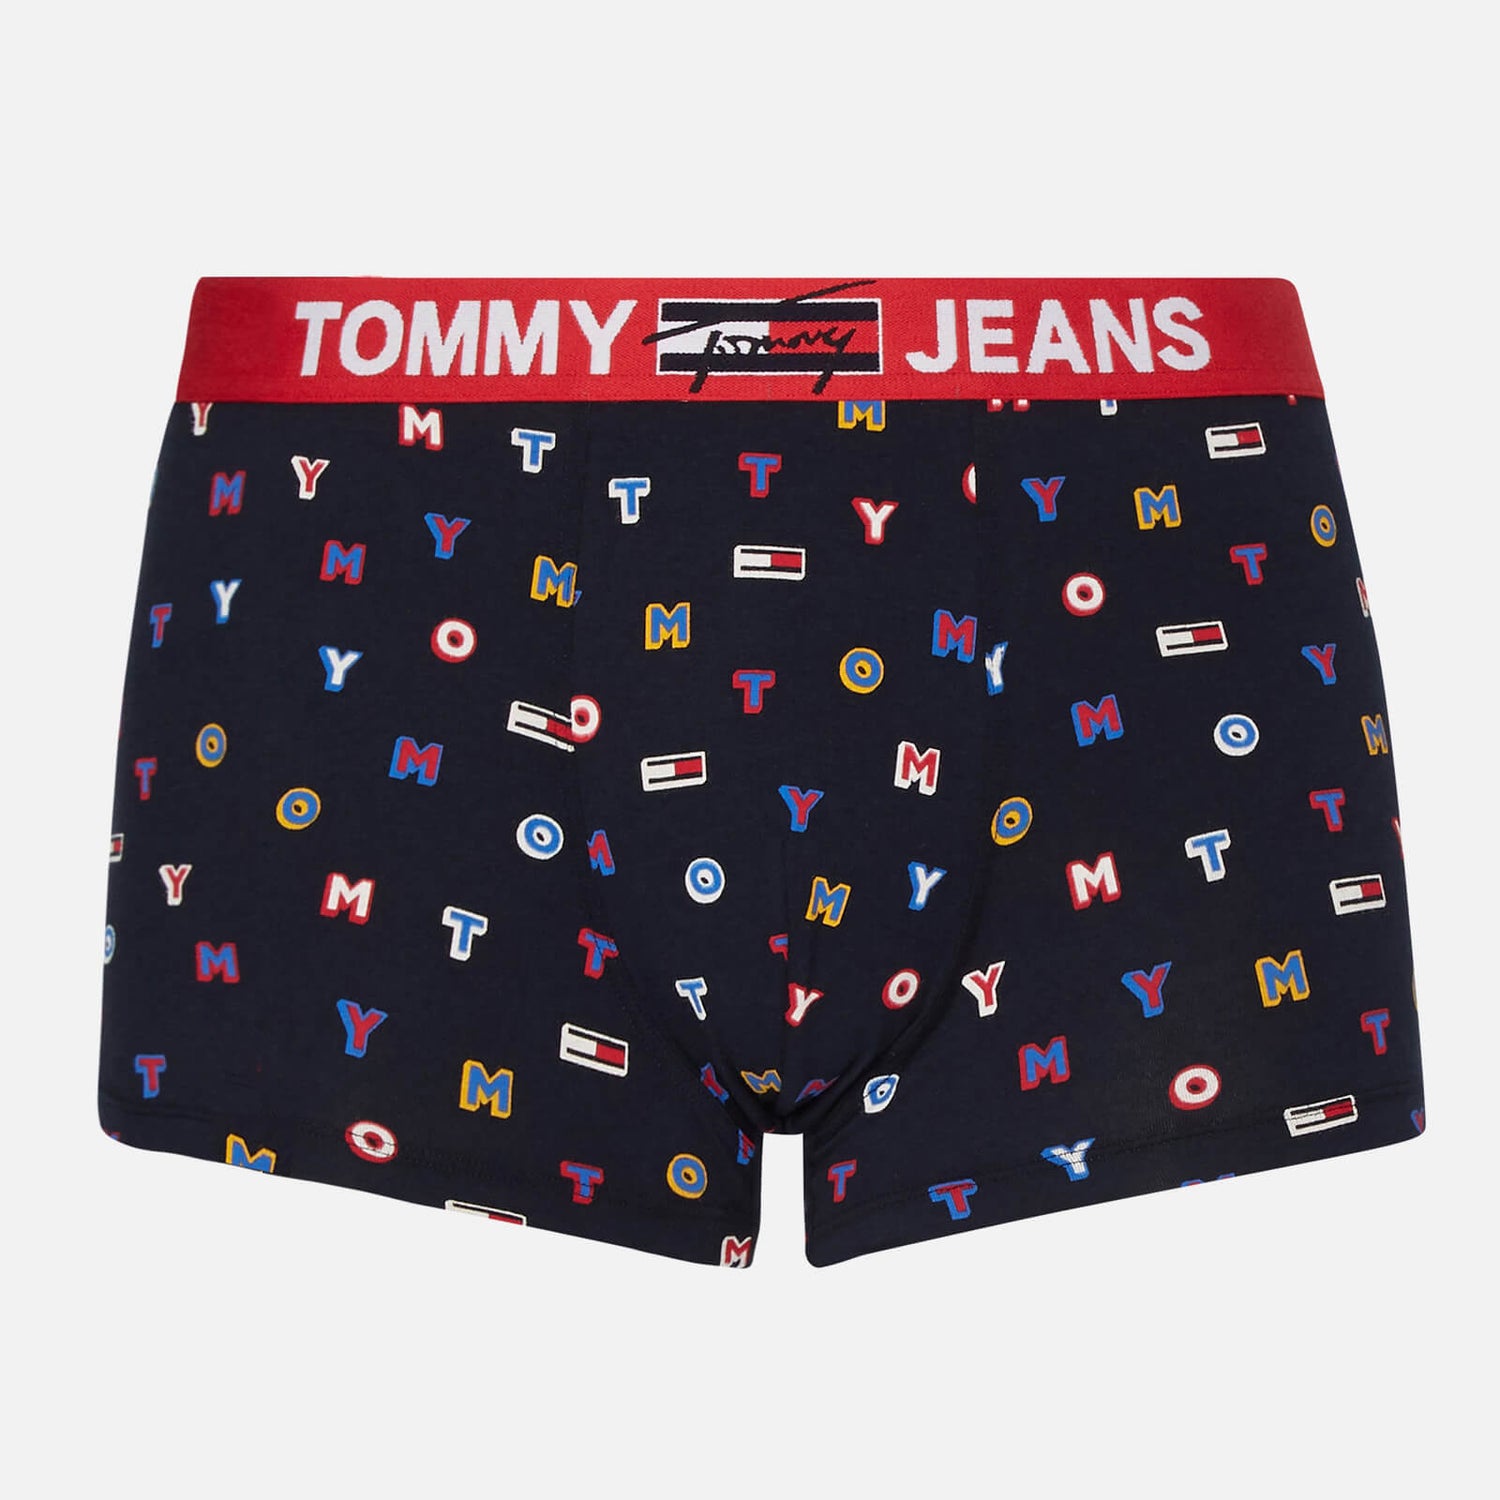 Tommy Jeans Men's Printed Trunks - Multi - S